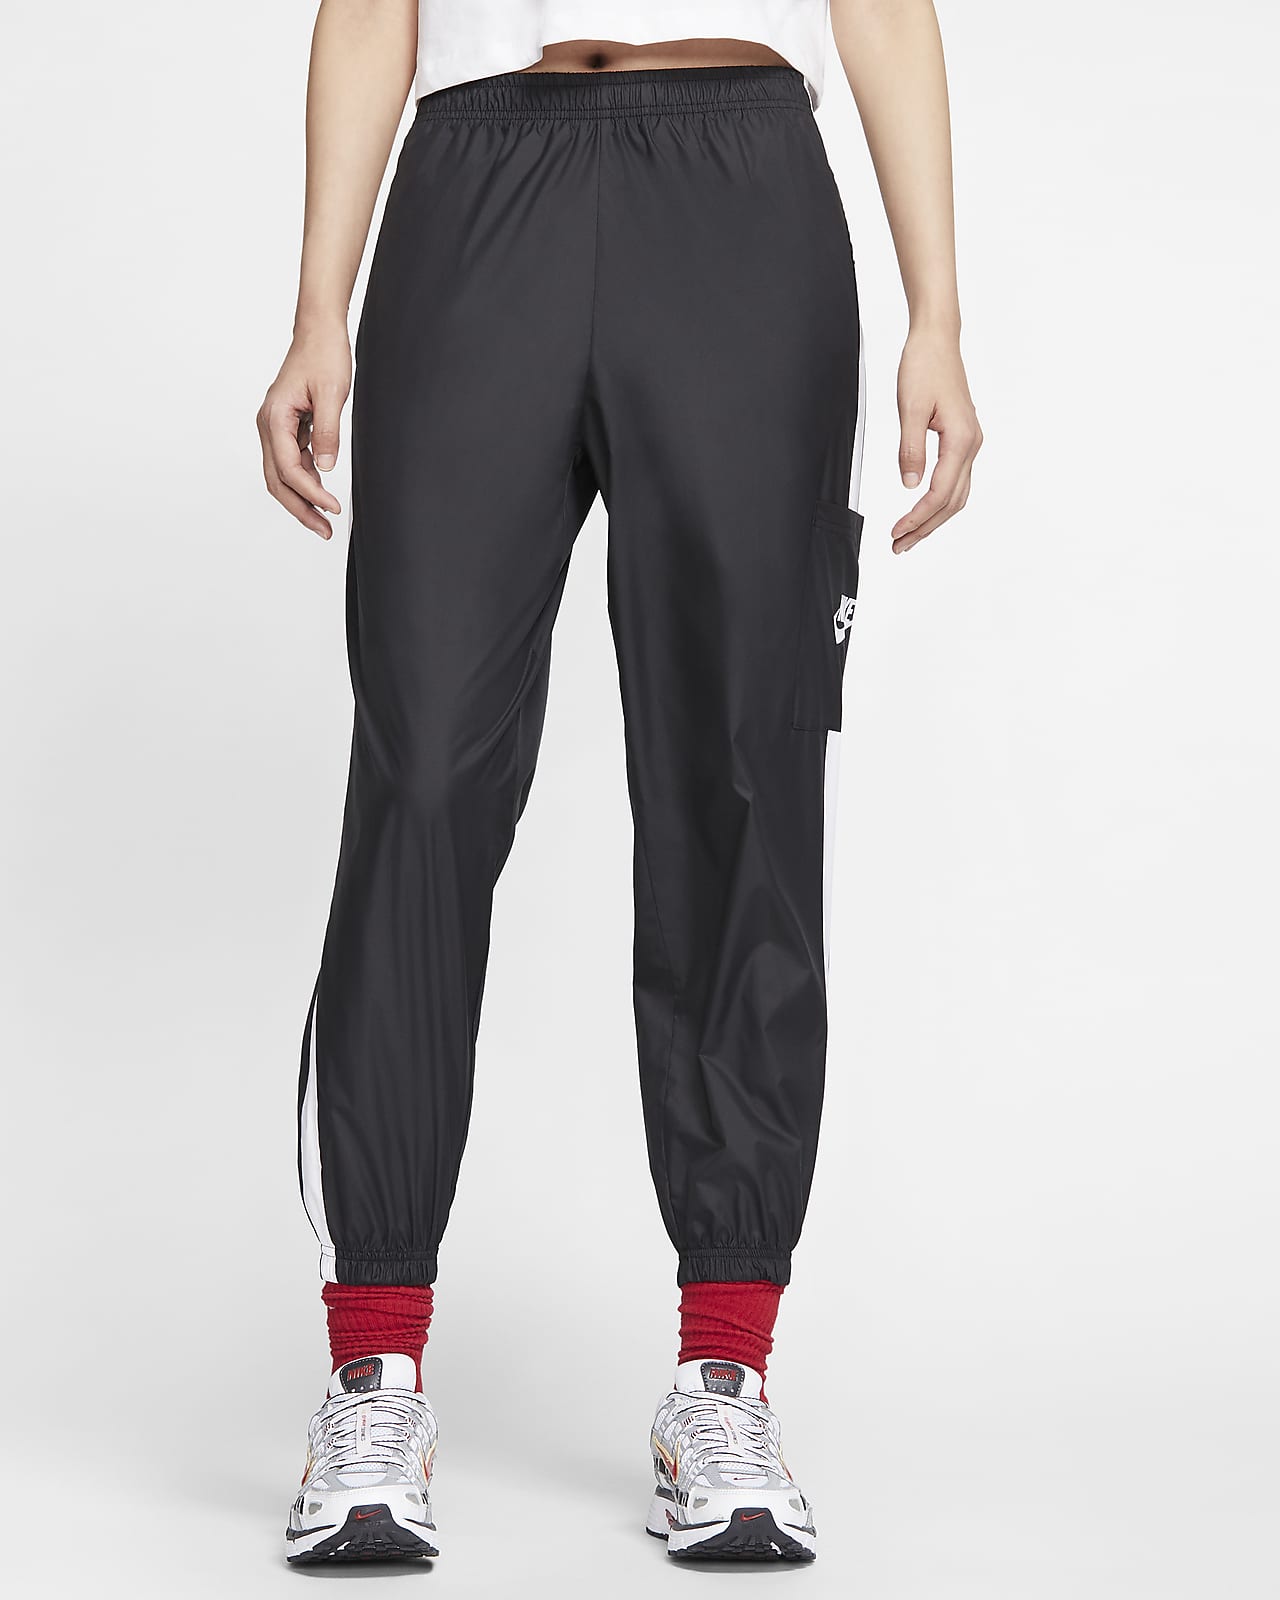 Pants de tejido Woven para mujer Nike Sportswear